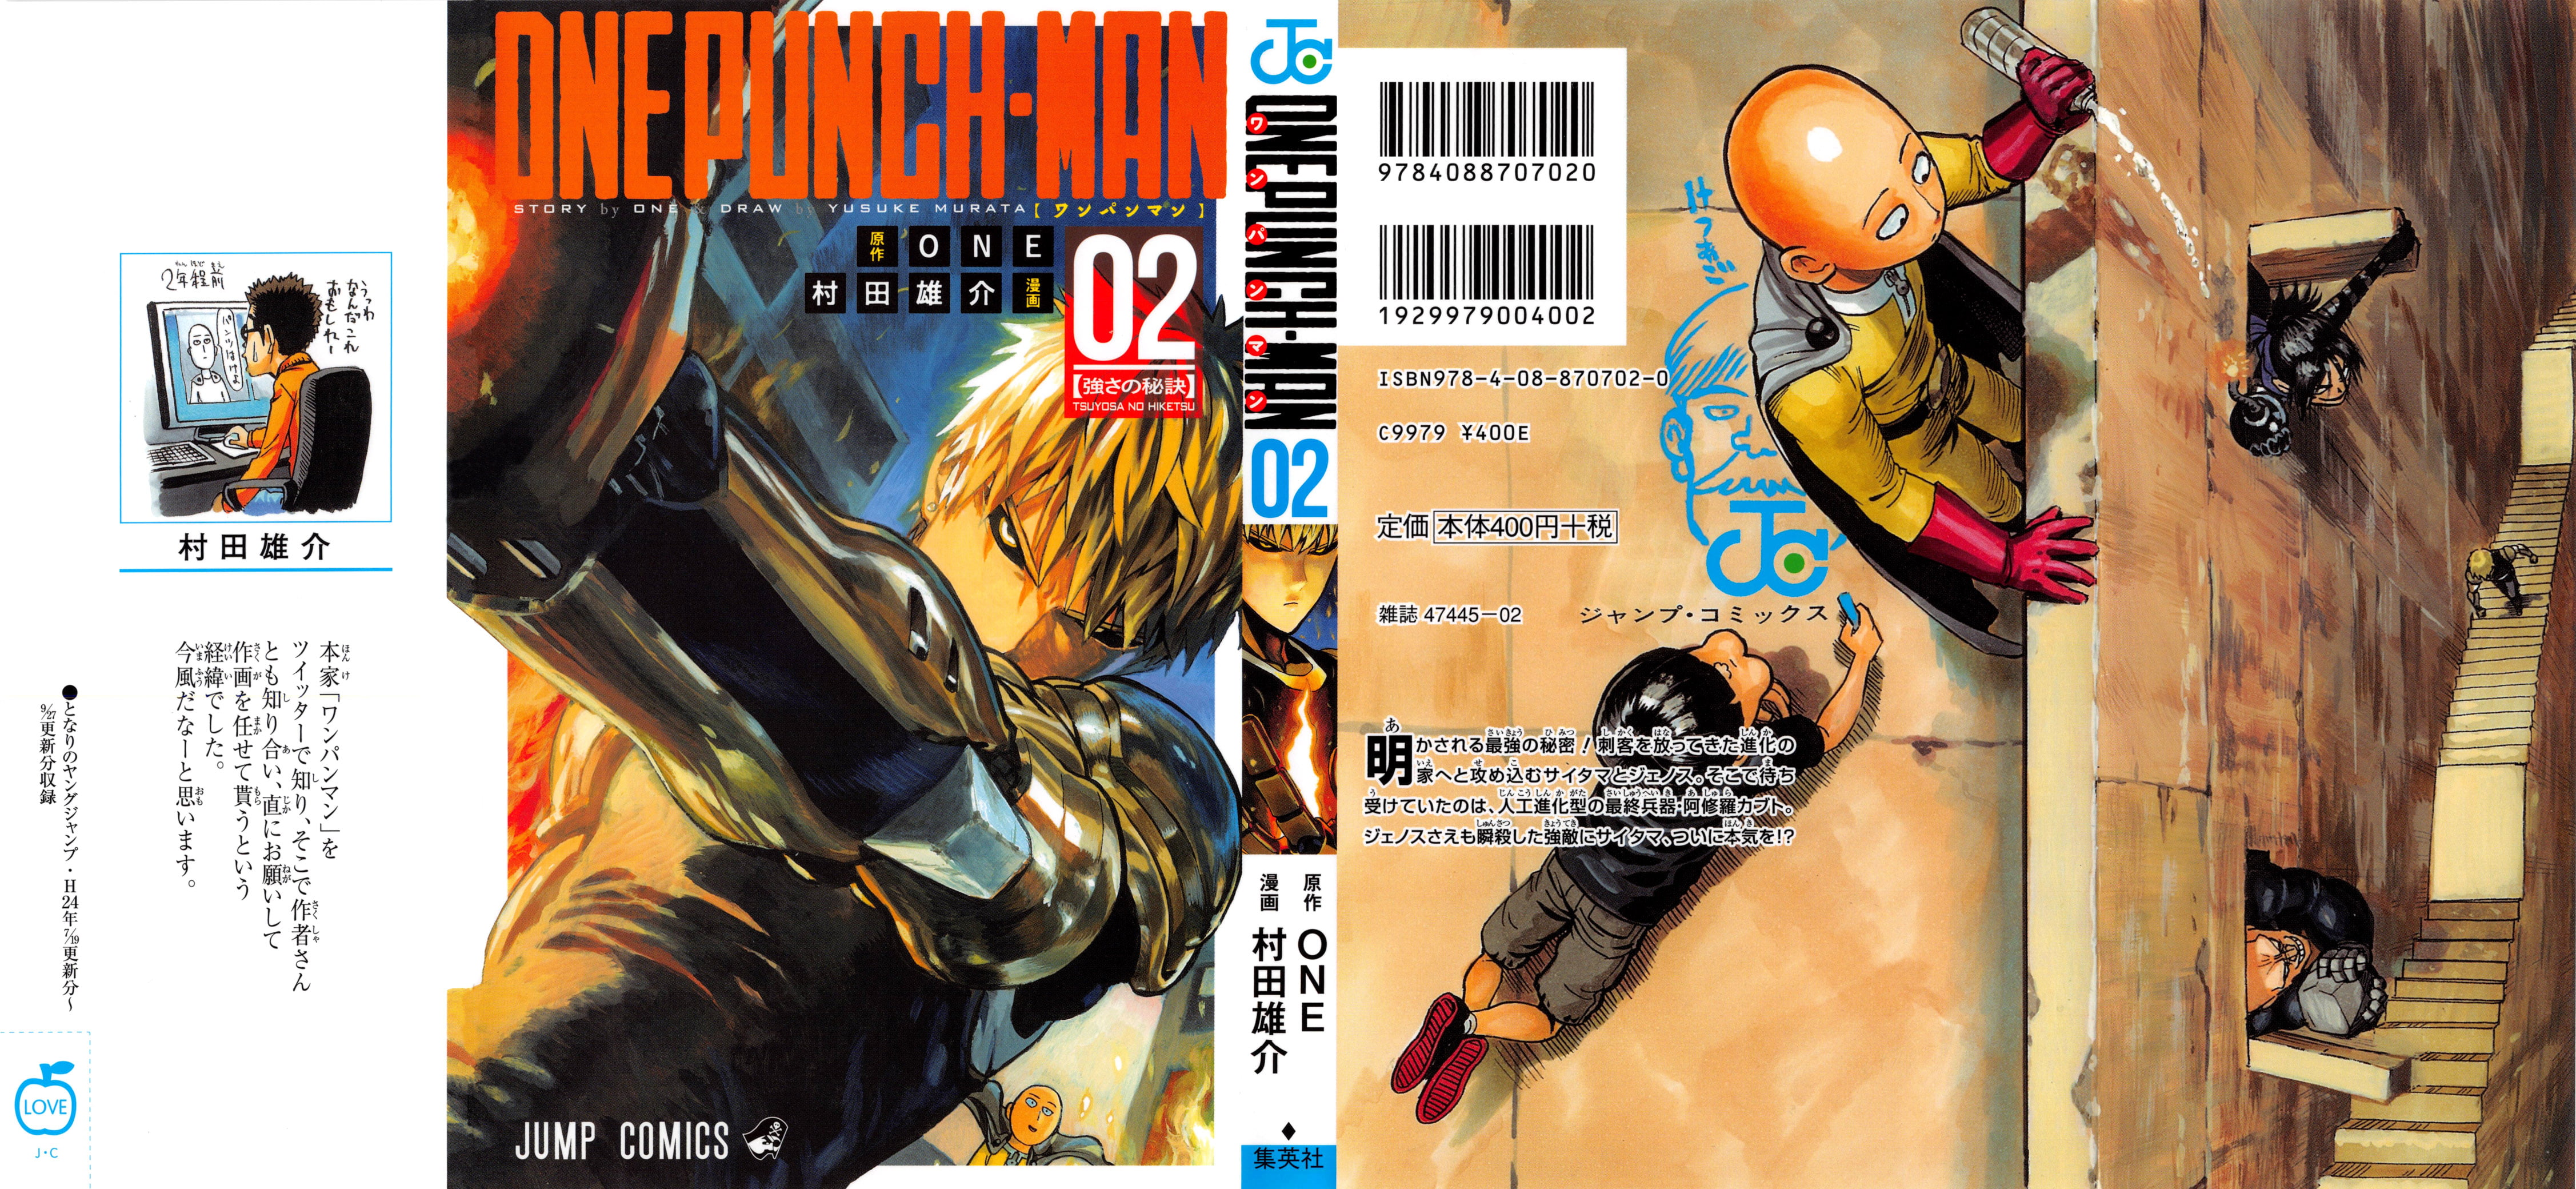 One-Punch Man, Yusuke Murata, Saitama, Genos, illustration